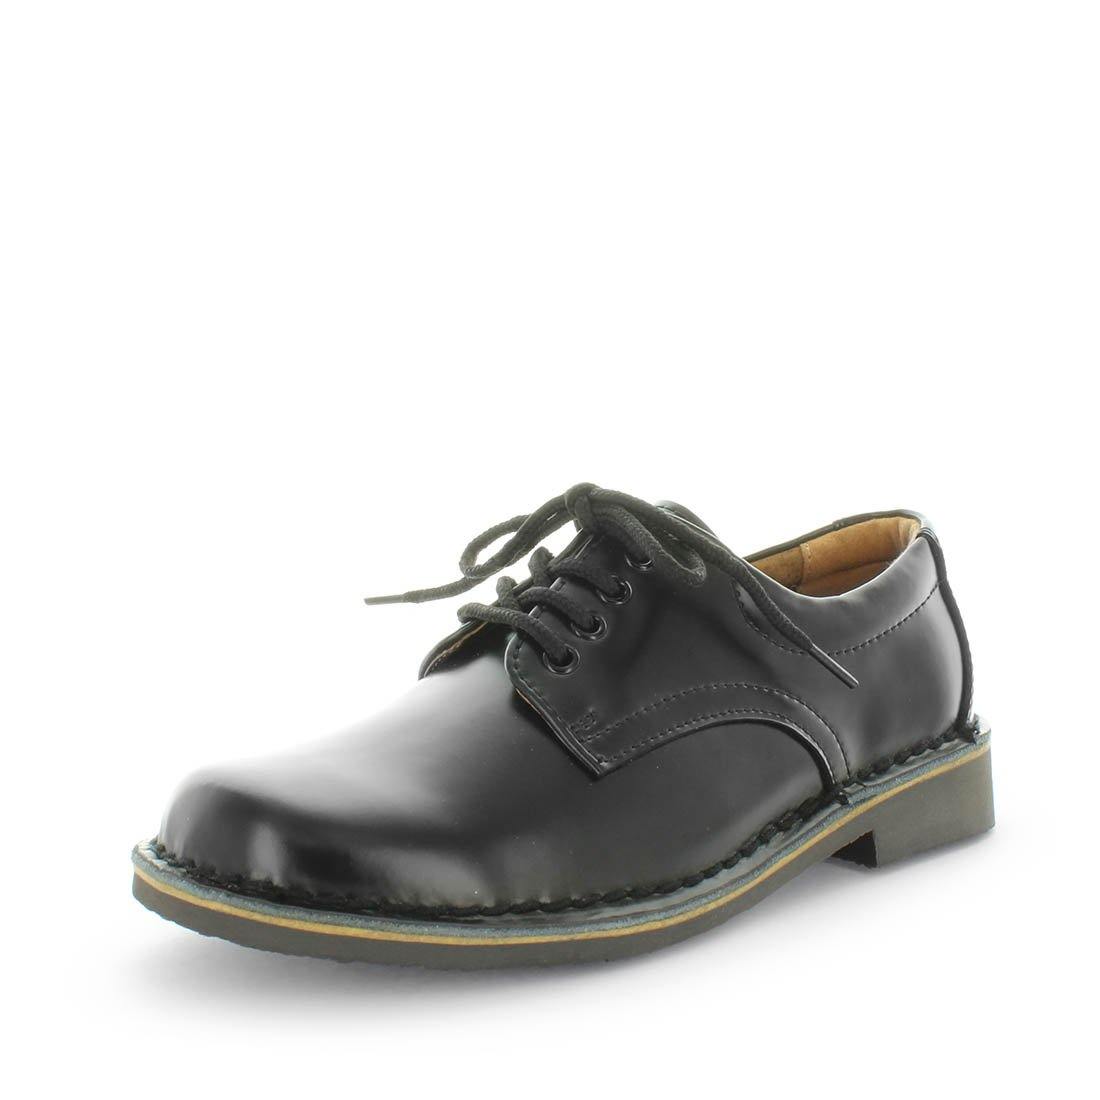 JEZRA-Jnr by WILDE SCHOOL - iShoes - School Shoes, School Shoes: Junior Girl's - FOOTWEAR-FOOTWEAR